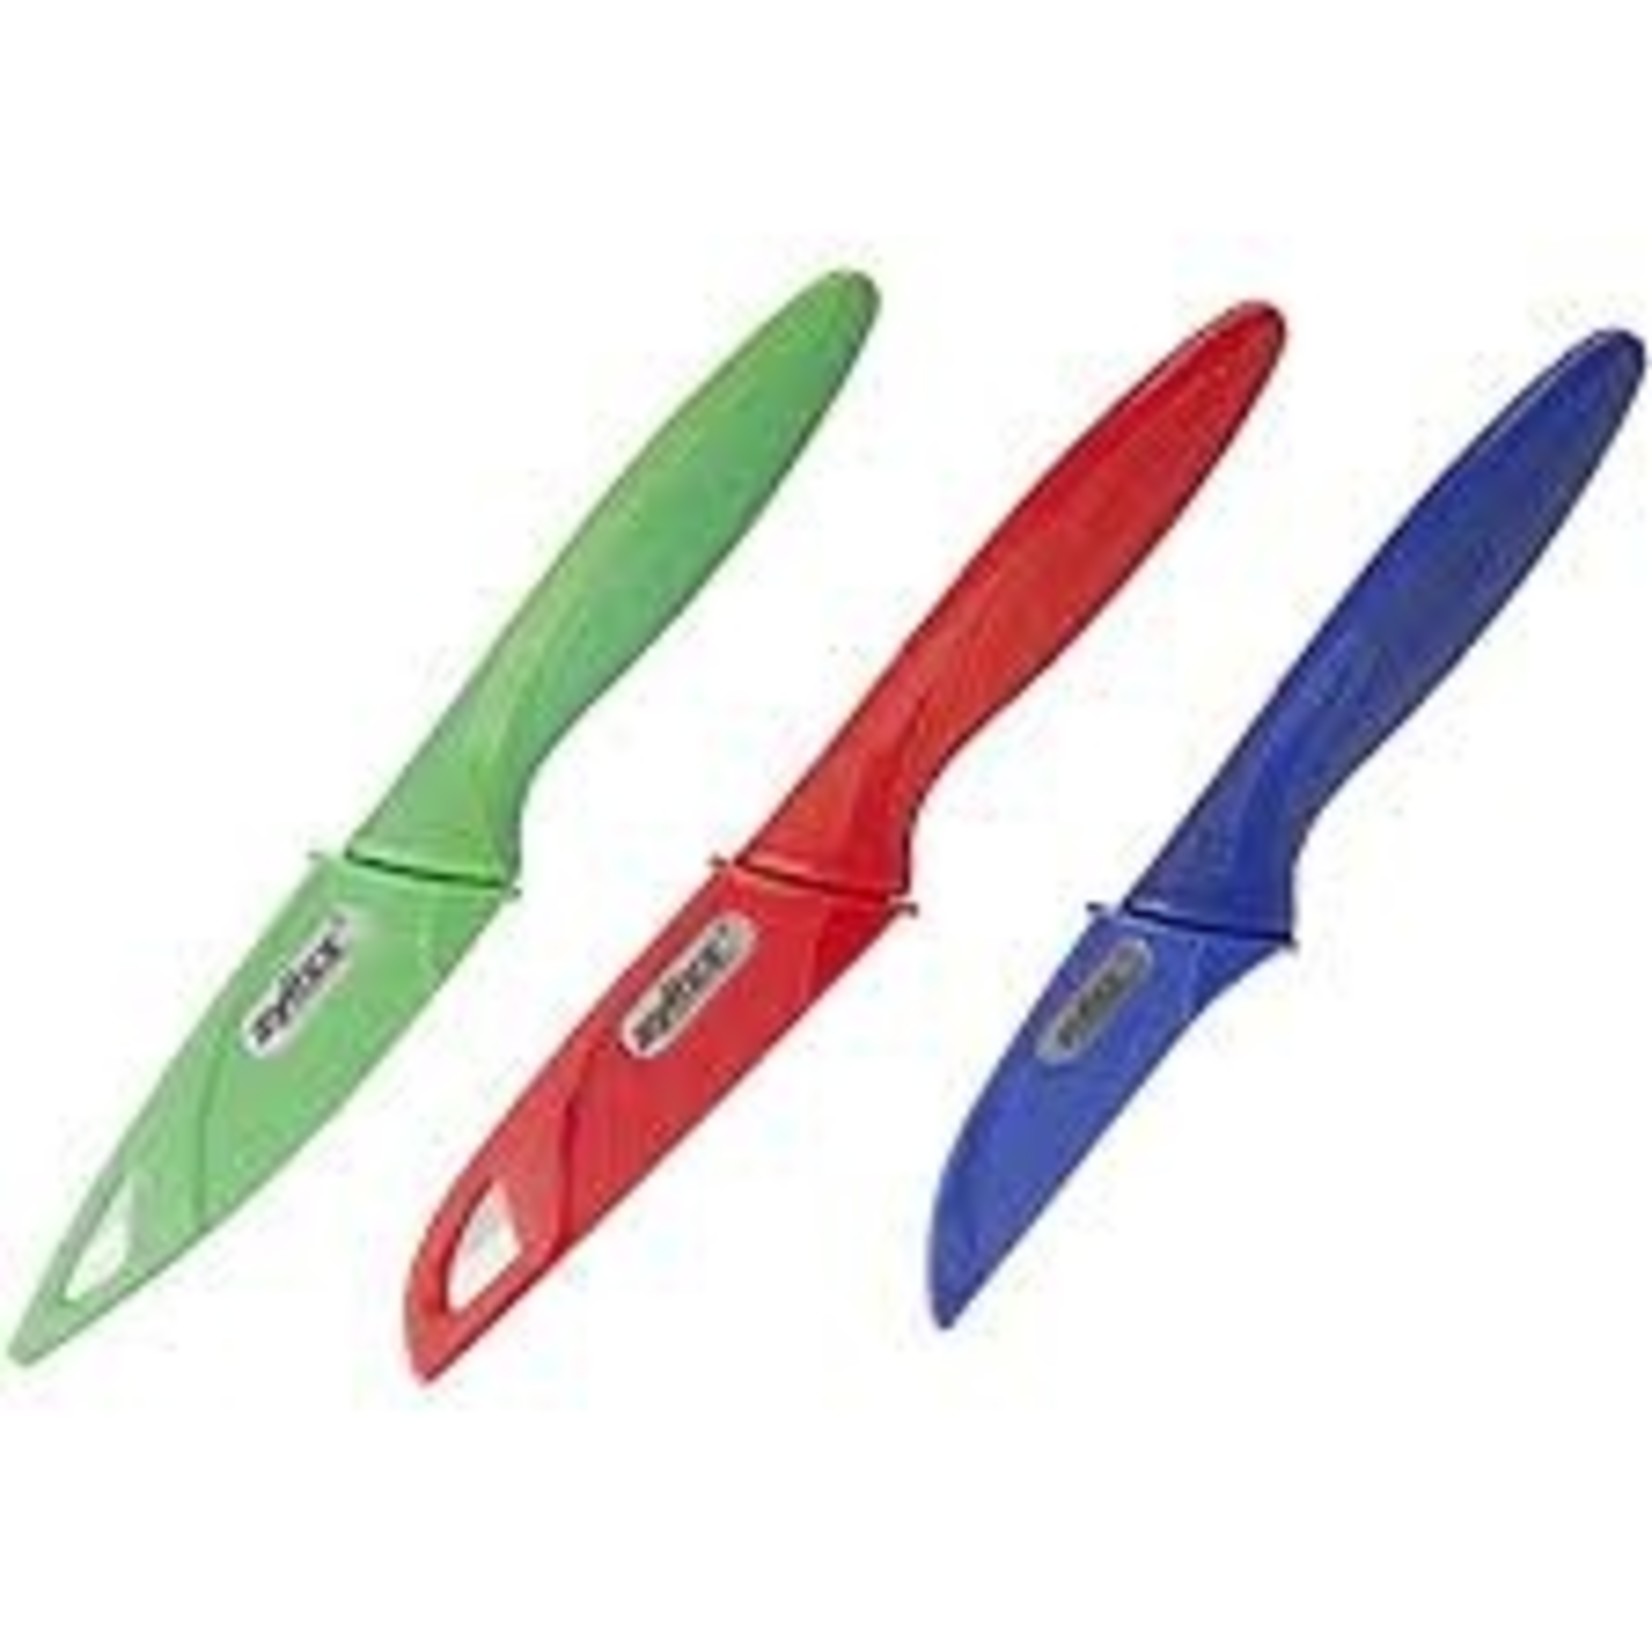 https://cdn.shoplightspeed.com/shops/627977/files/41594527/1652x1652x2/zyliss-zyliss-peeling-paring-knife-set.jpg